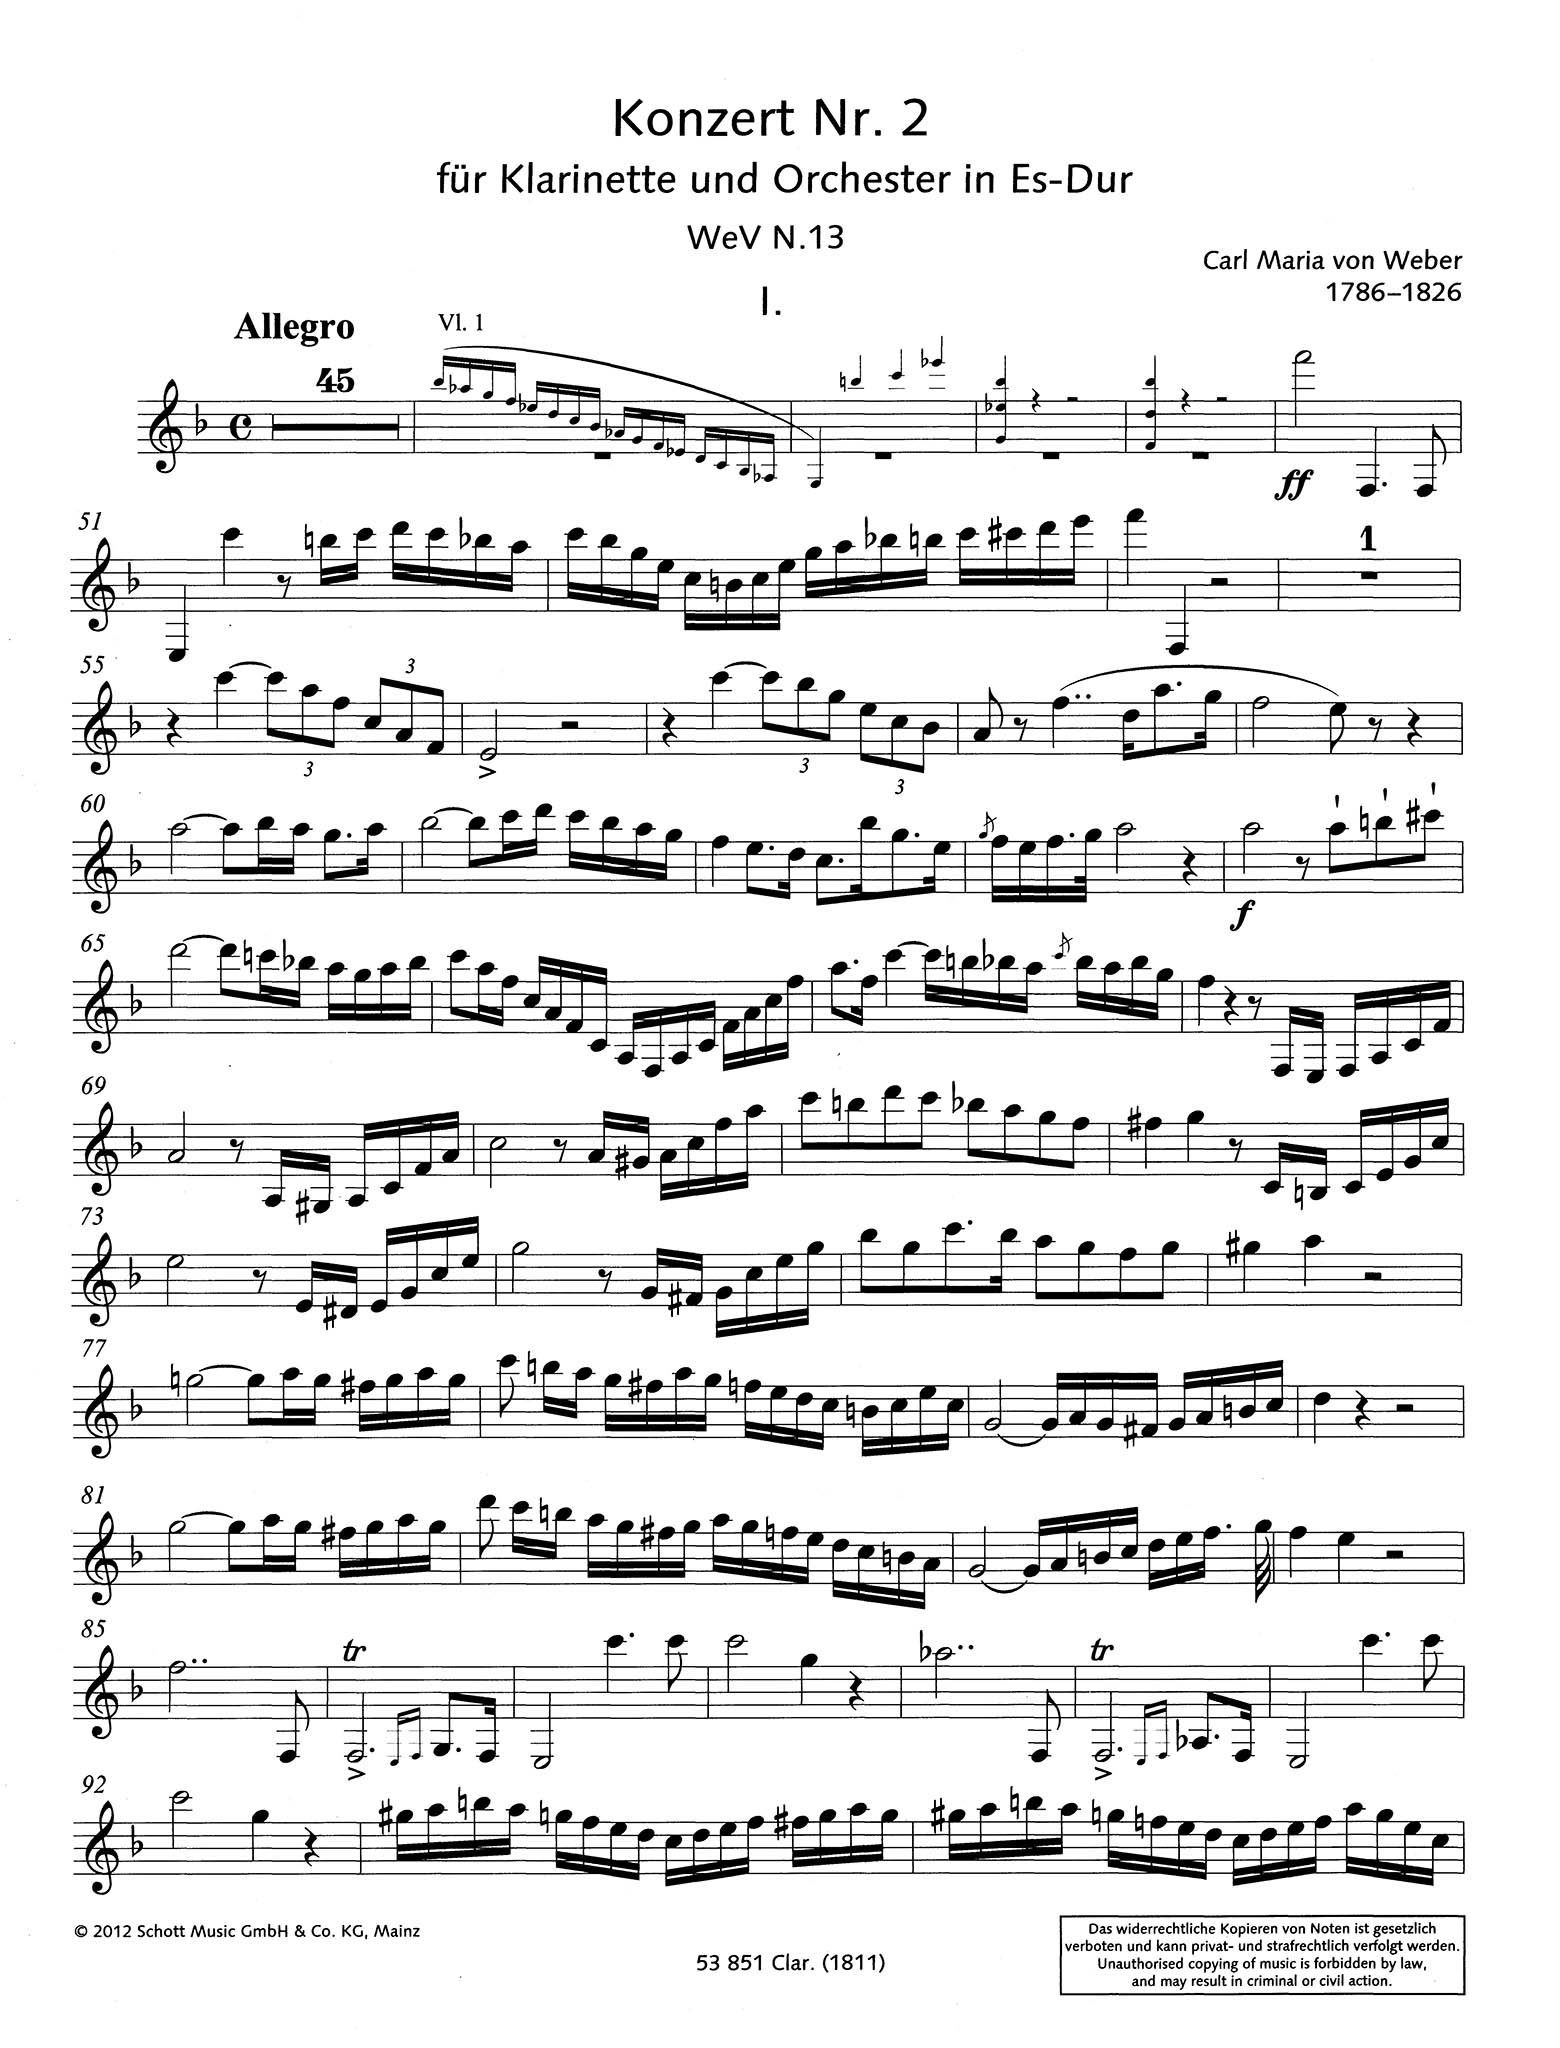 Clarinet Concerto No. 2 in E-flat Major, Op. 74 1811 Clarinet part